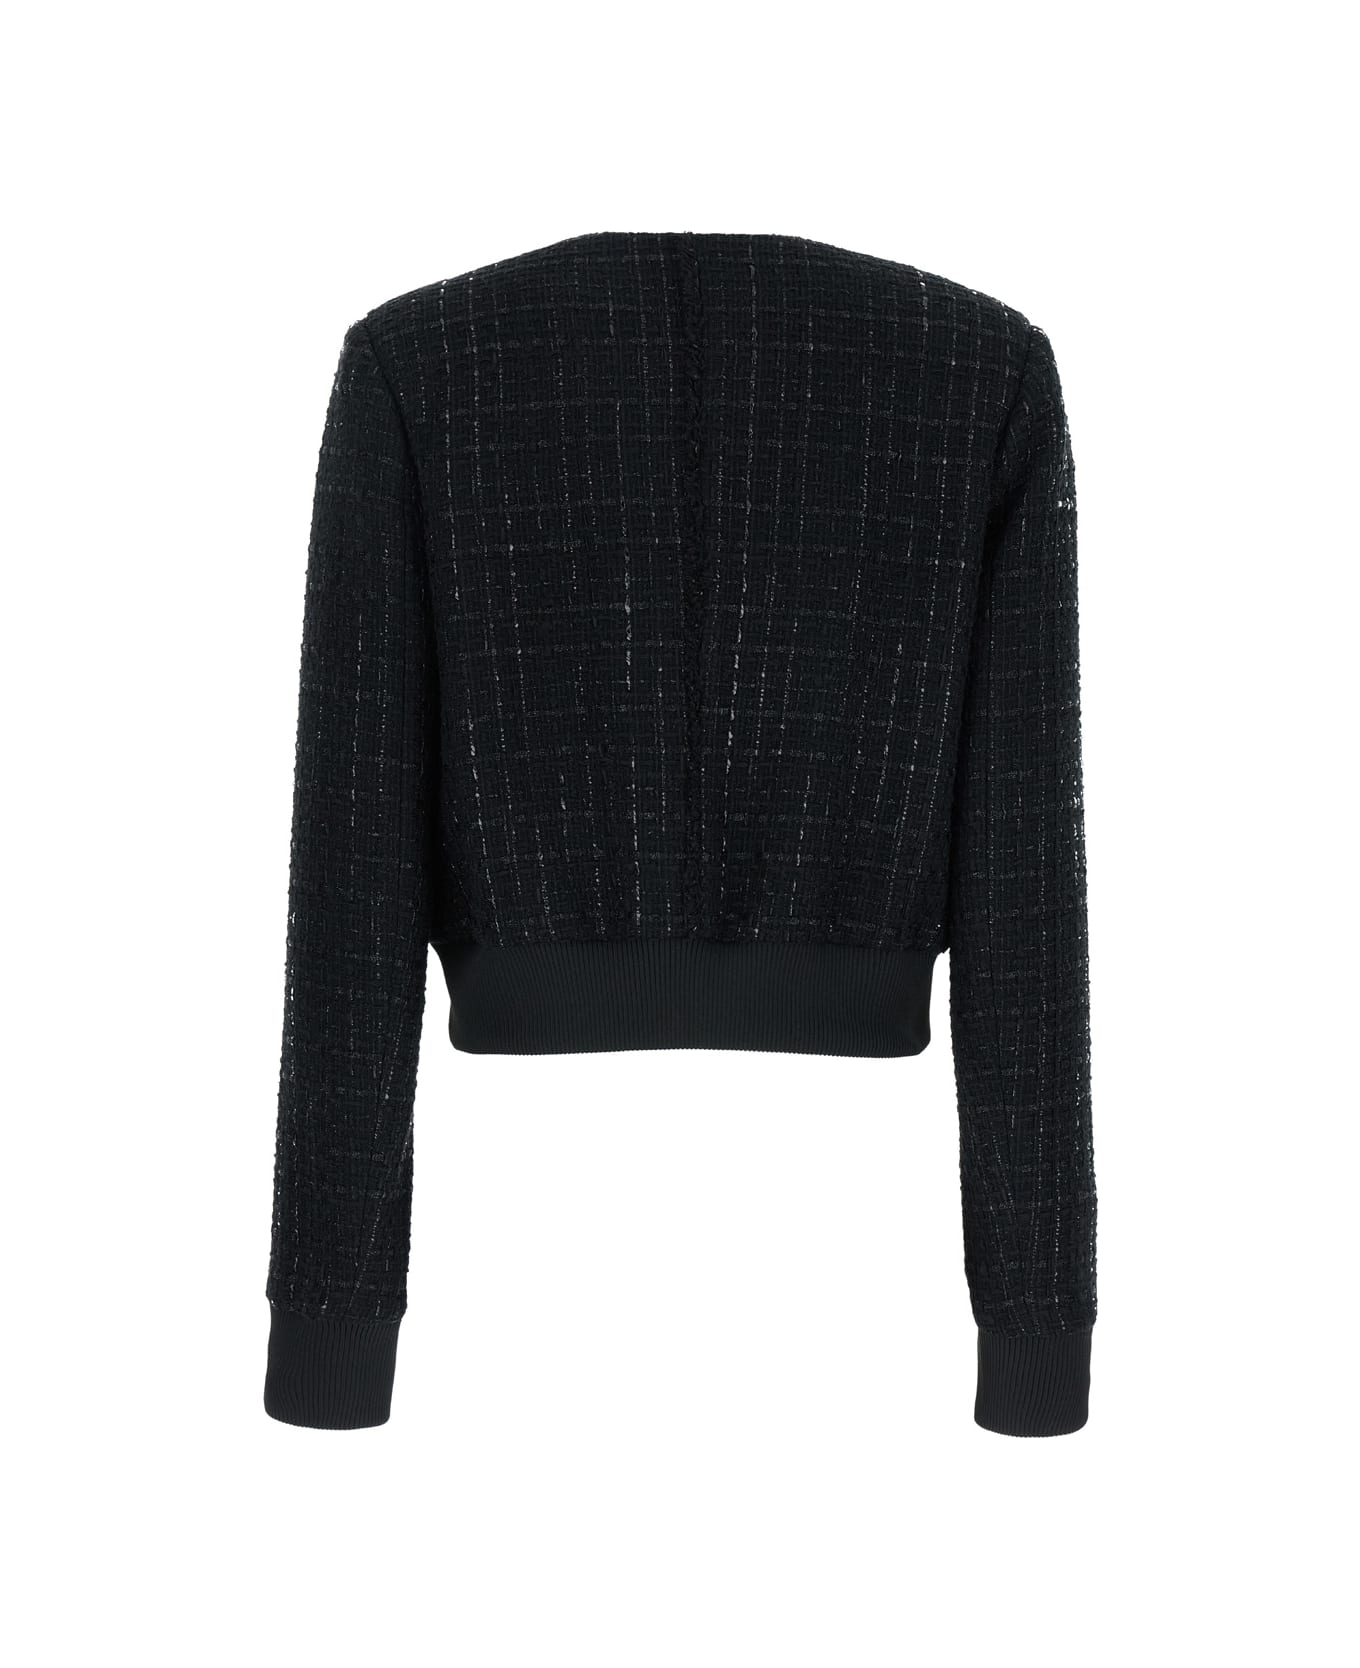 Balmain Buttoned Tweed Blouson - Black